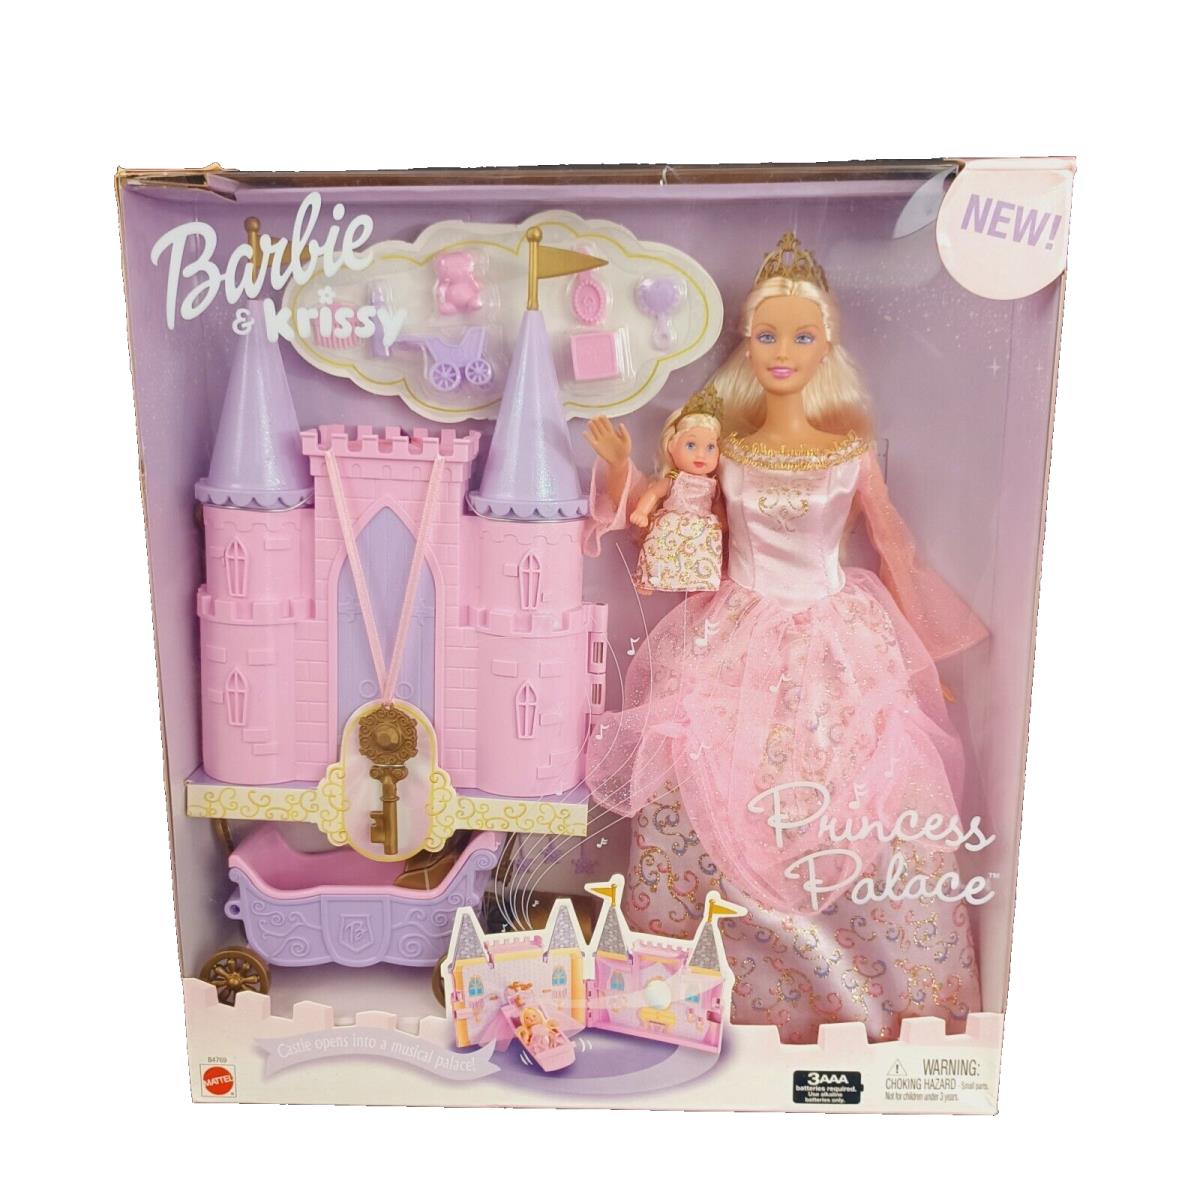 Mattel Barbie and Krissy Princess Palace Play Set Pink 2003 B4769 Mib Nrfb